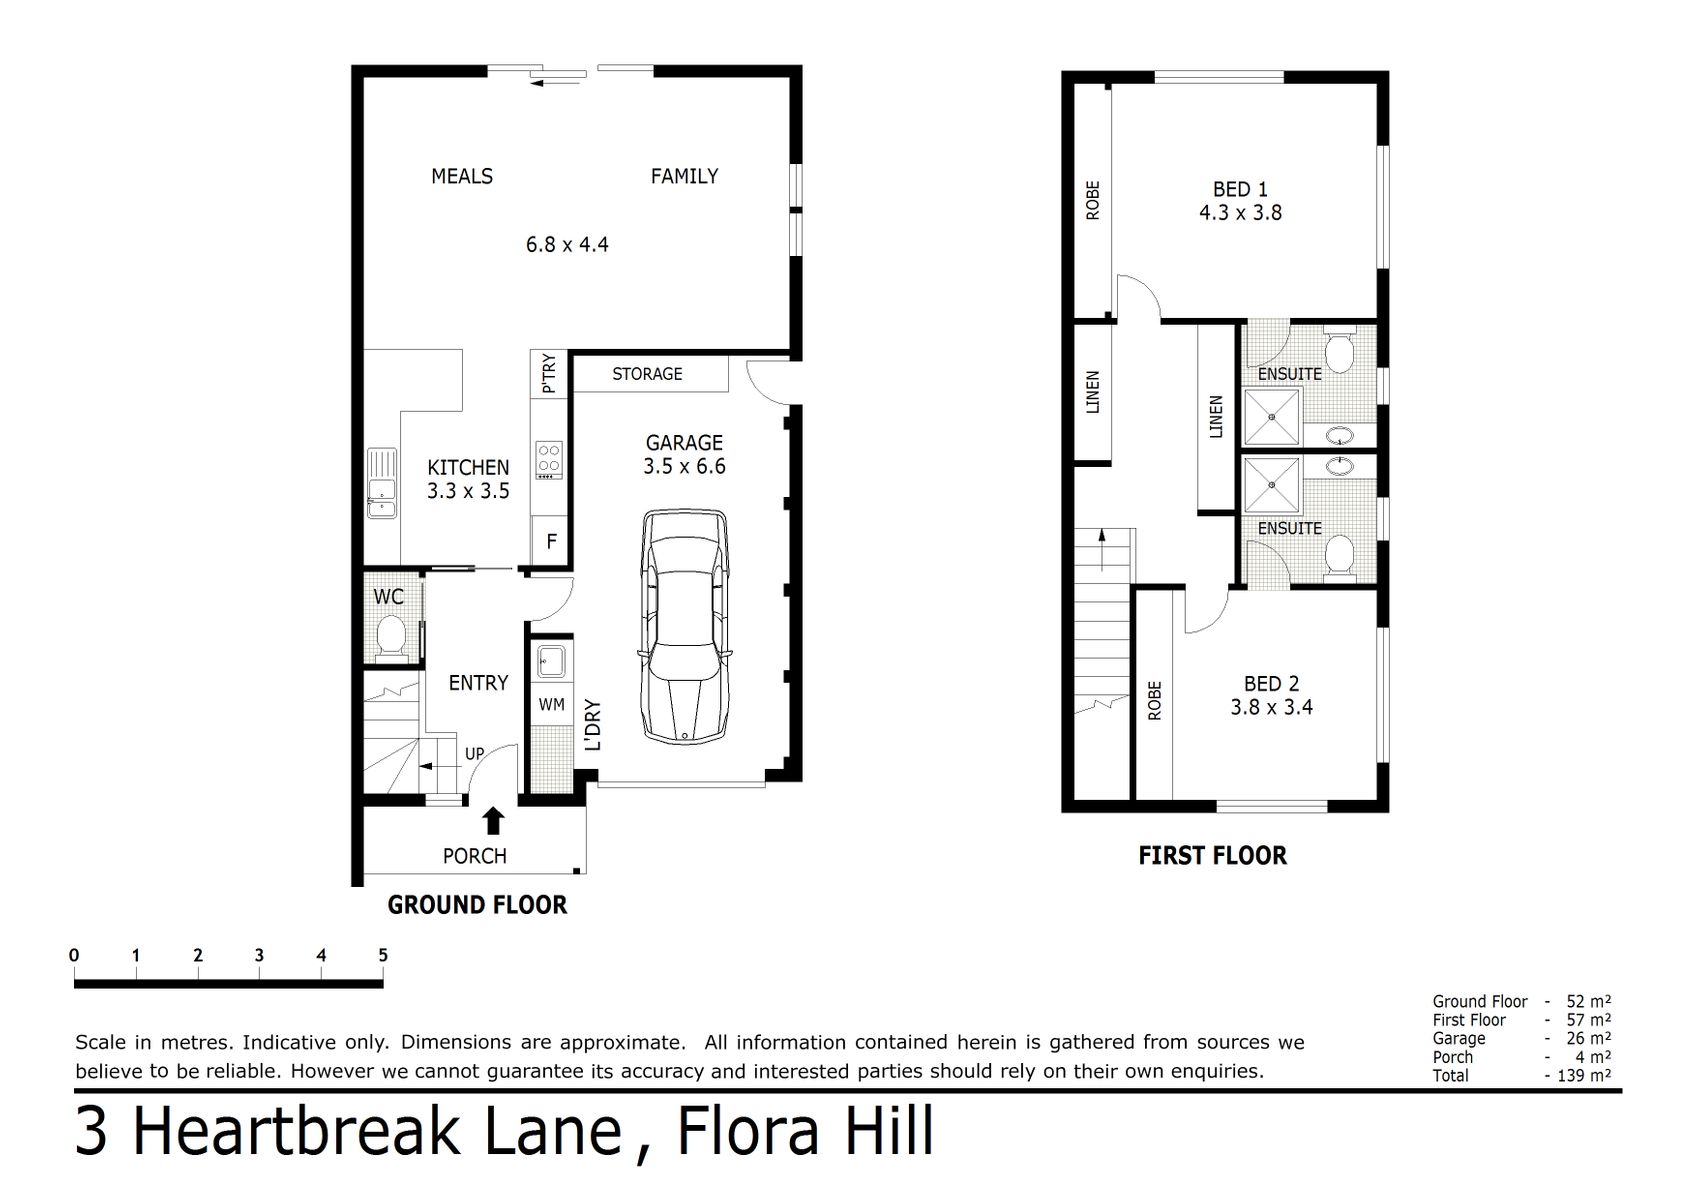 3 Heartbreak Lane  Flora Hill (15 OCT 2020) 135sqm